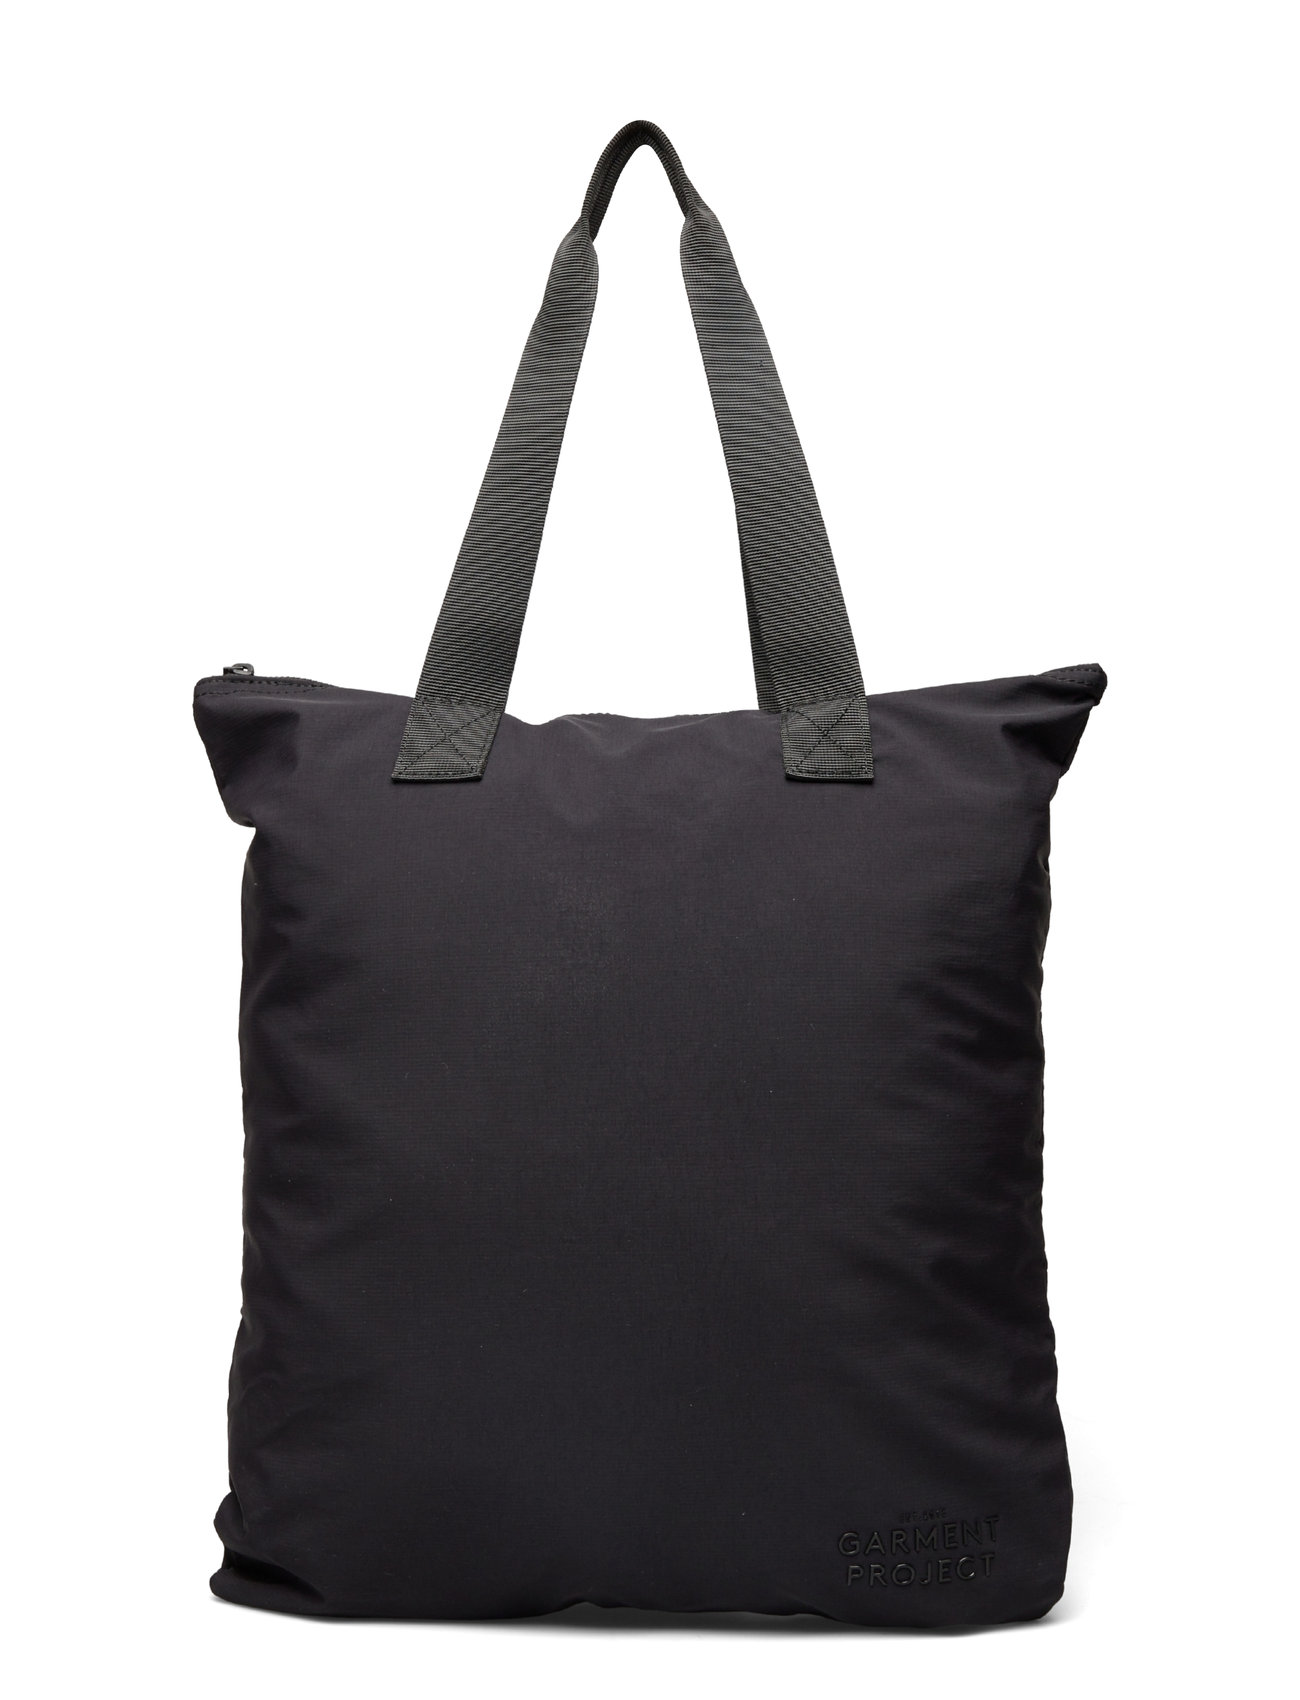 Garment Project Logo Tote Bag - Black - Shoppere & Tote Bags - Boozt.com